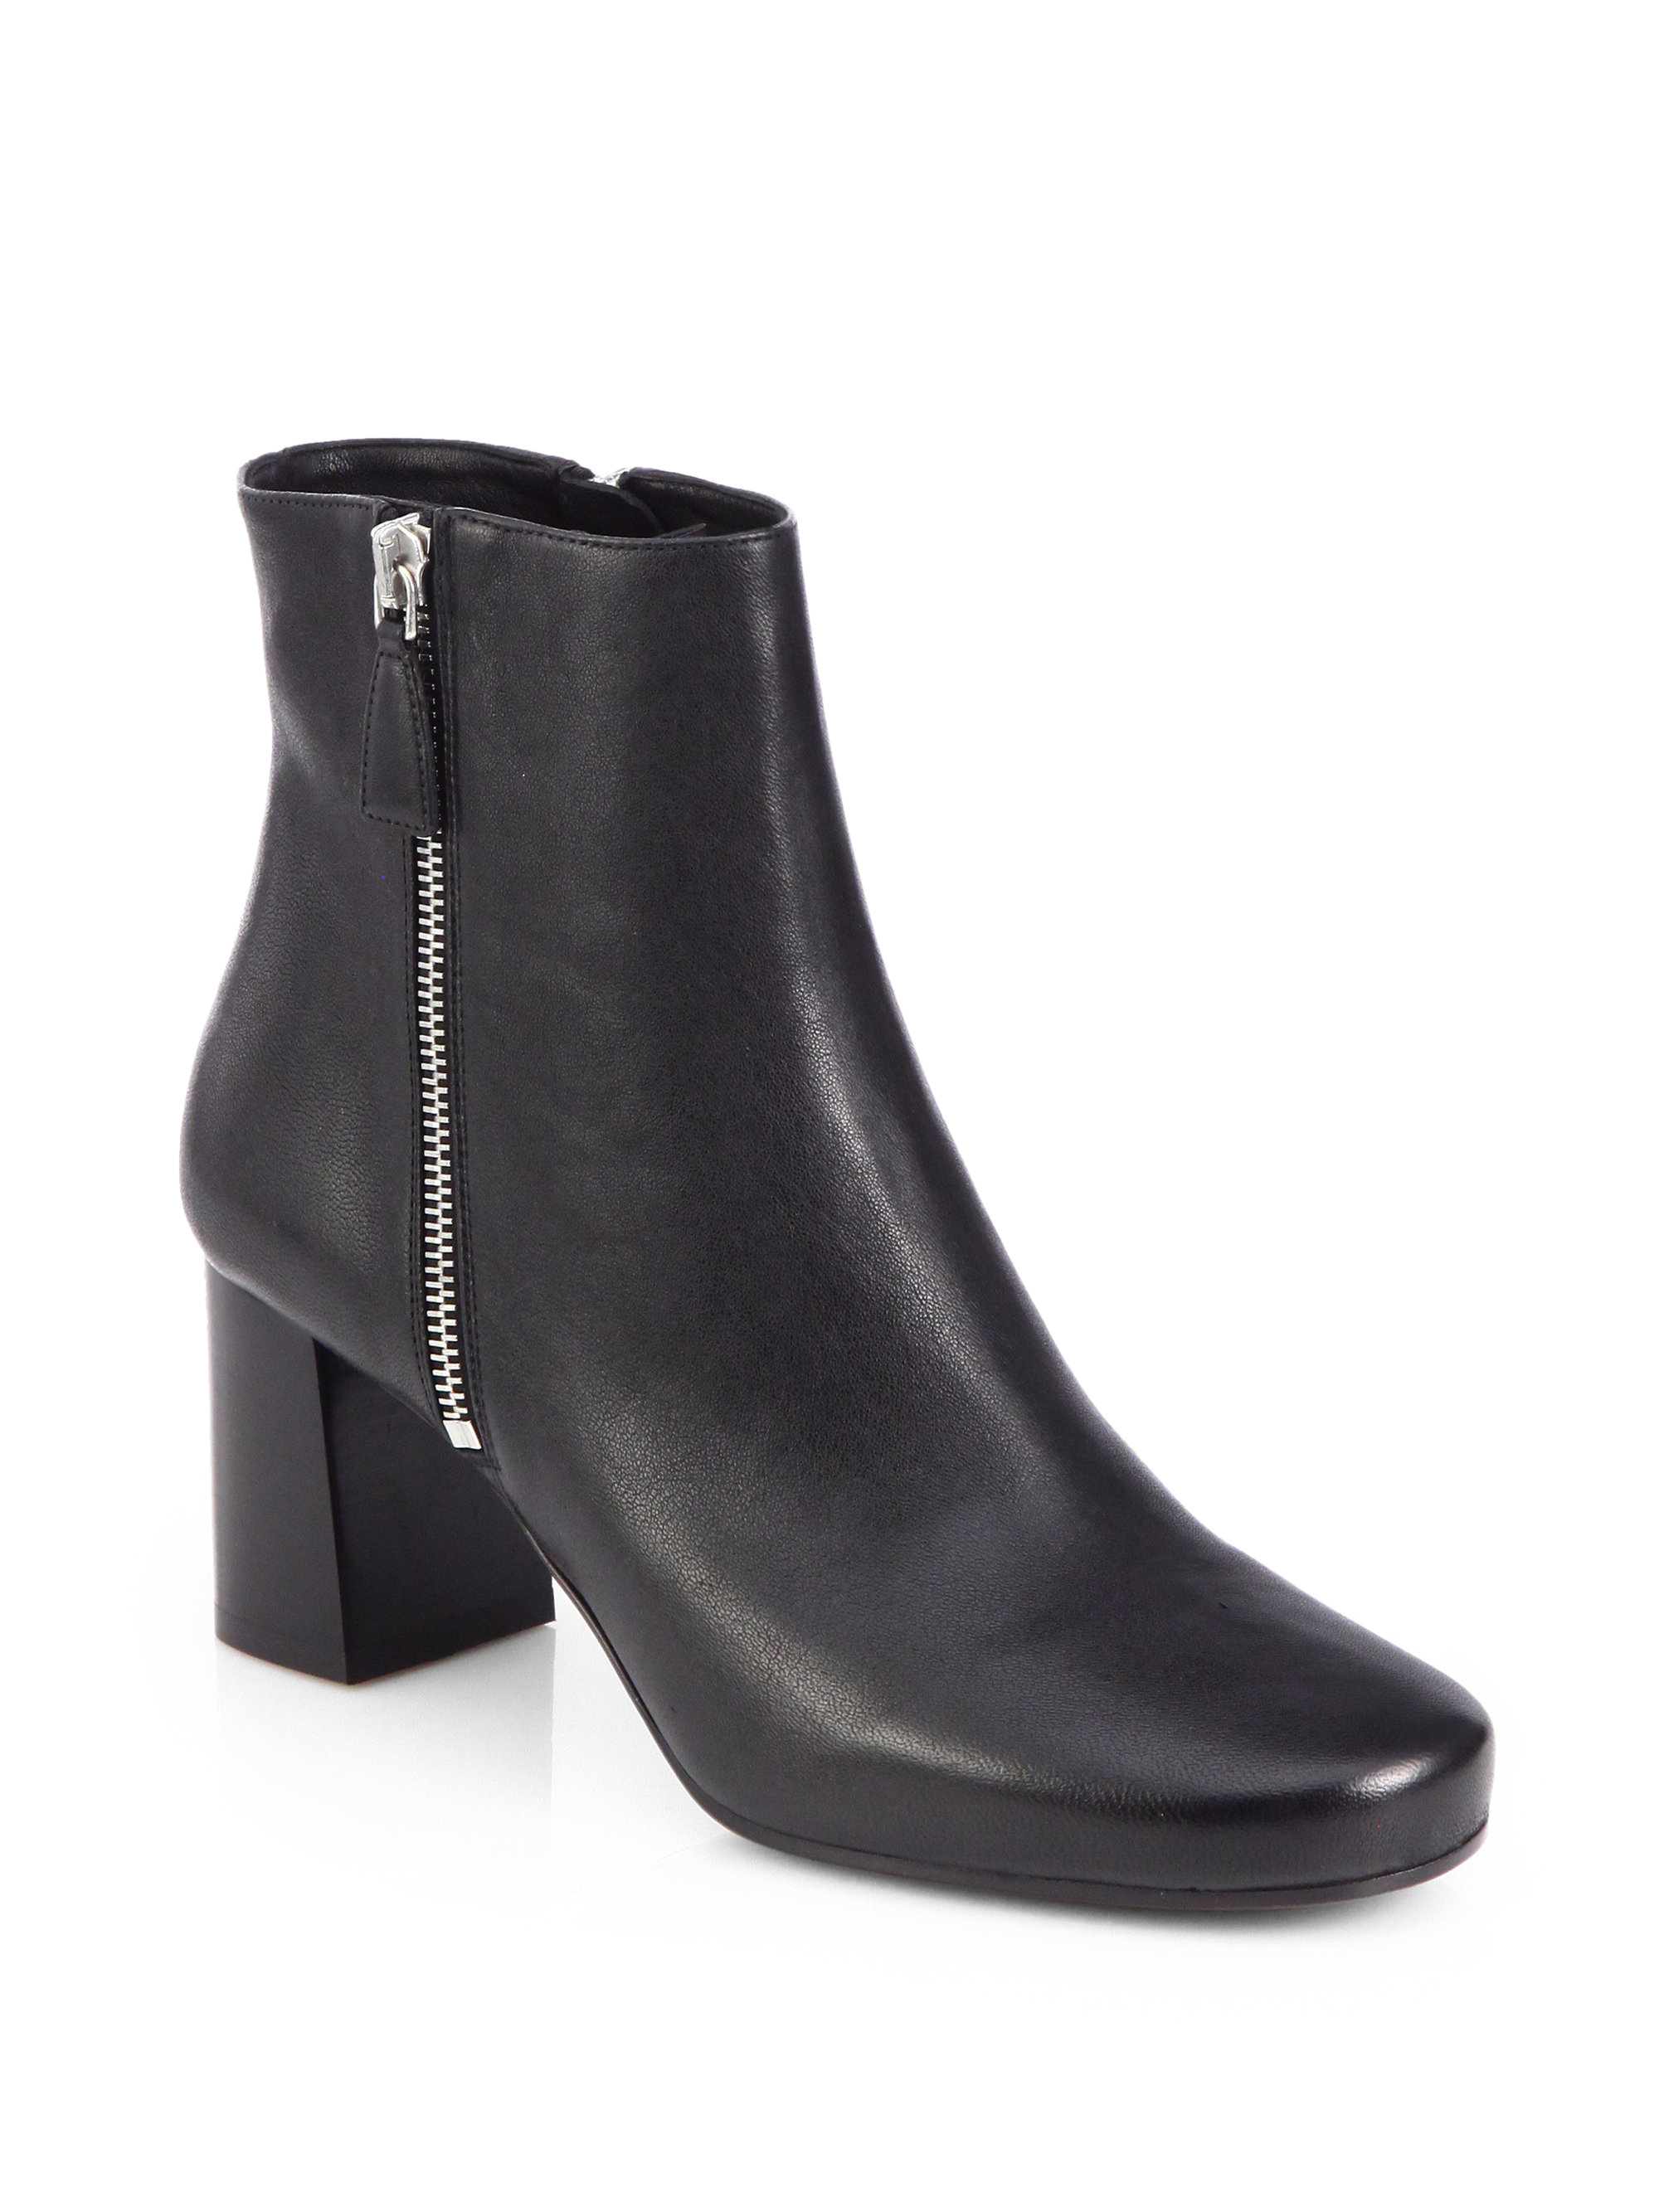 Prada Leather Sidezip Ankle Boots in Nero-Black (Black) - Lyst